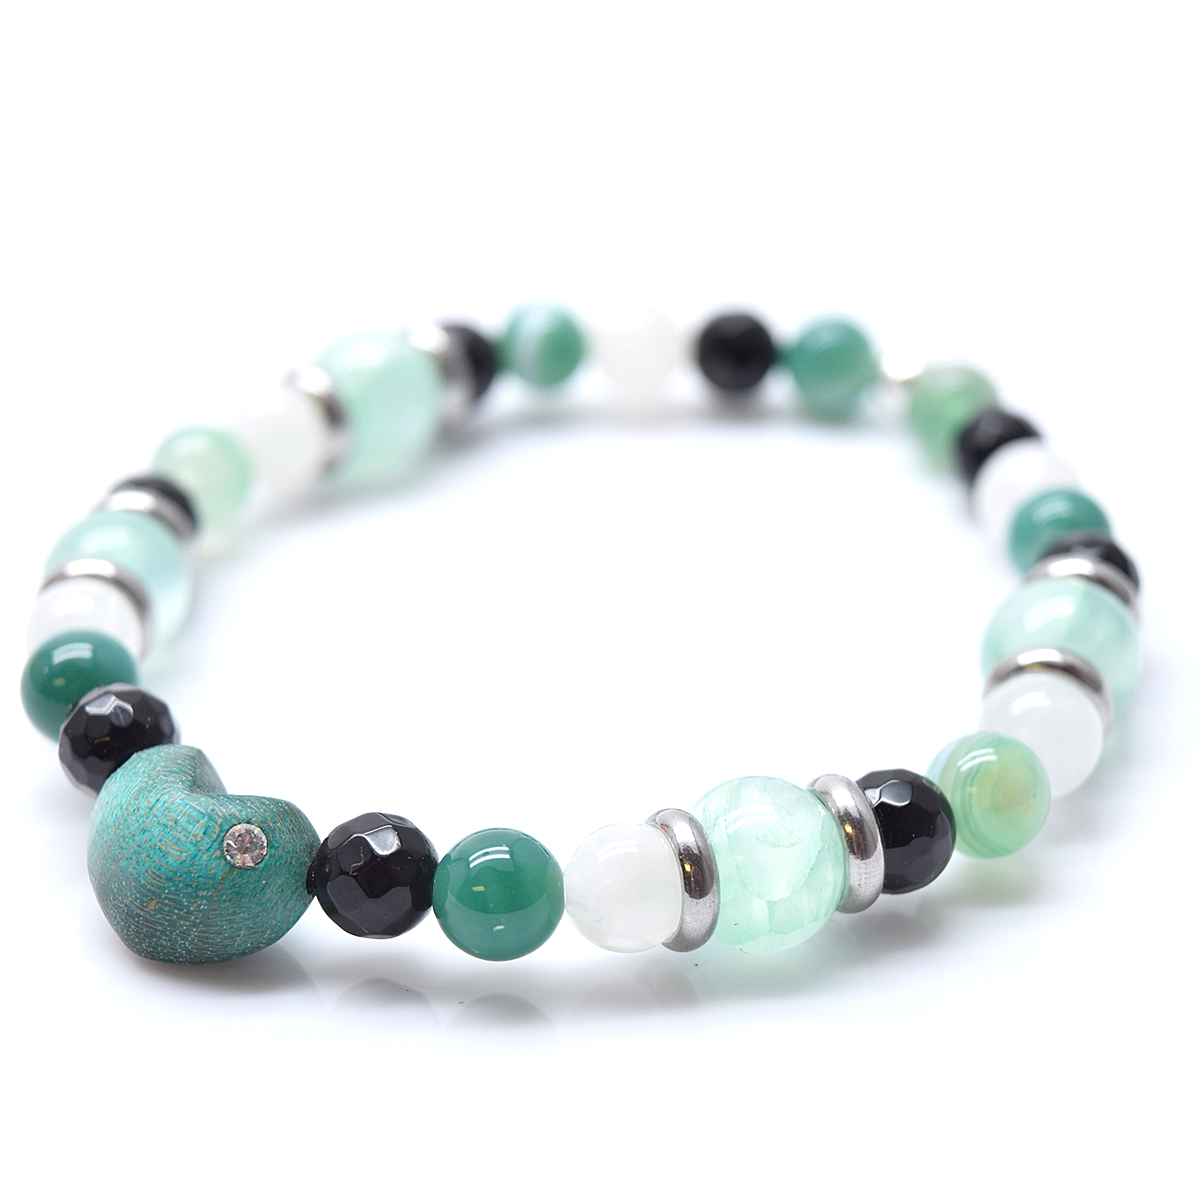 Bracelet to personalize, heart and semi-precious stones